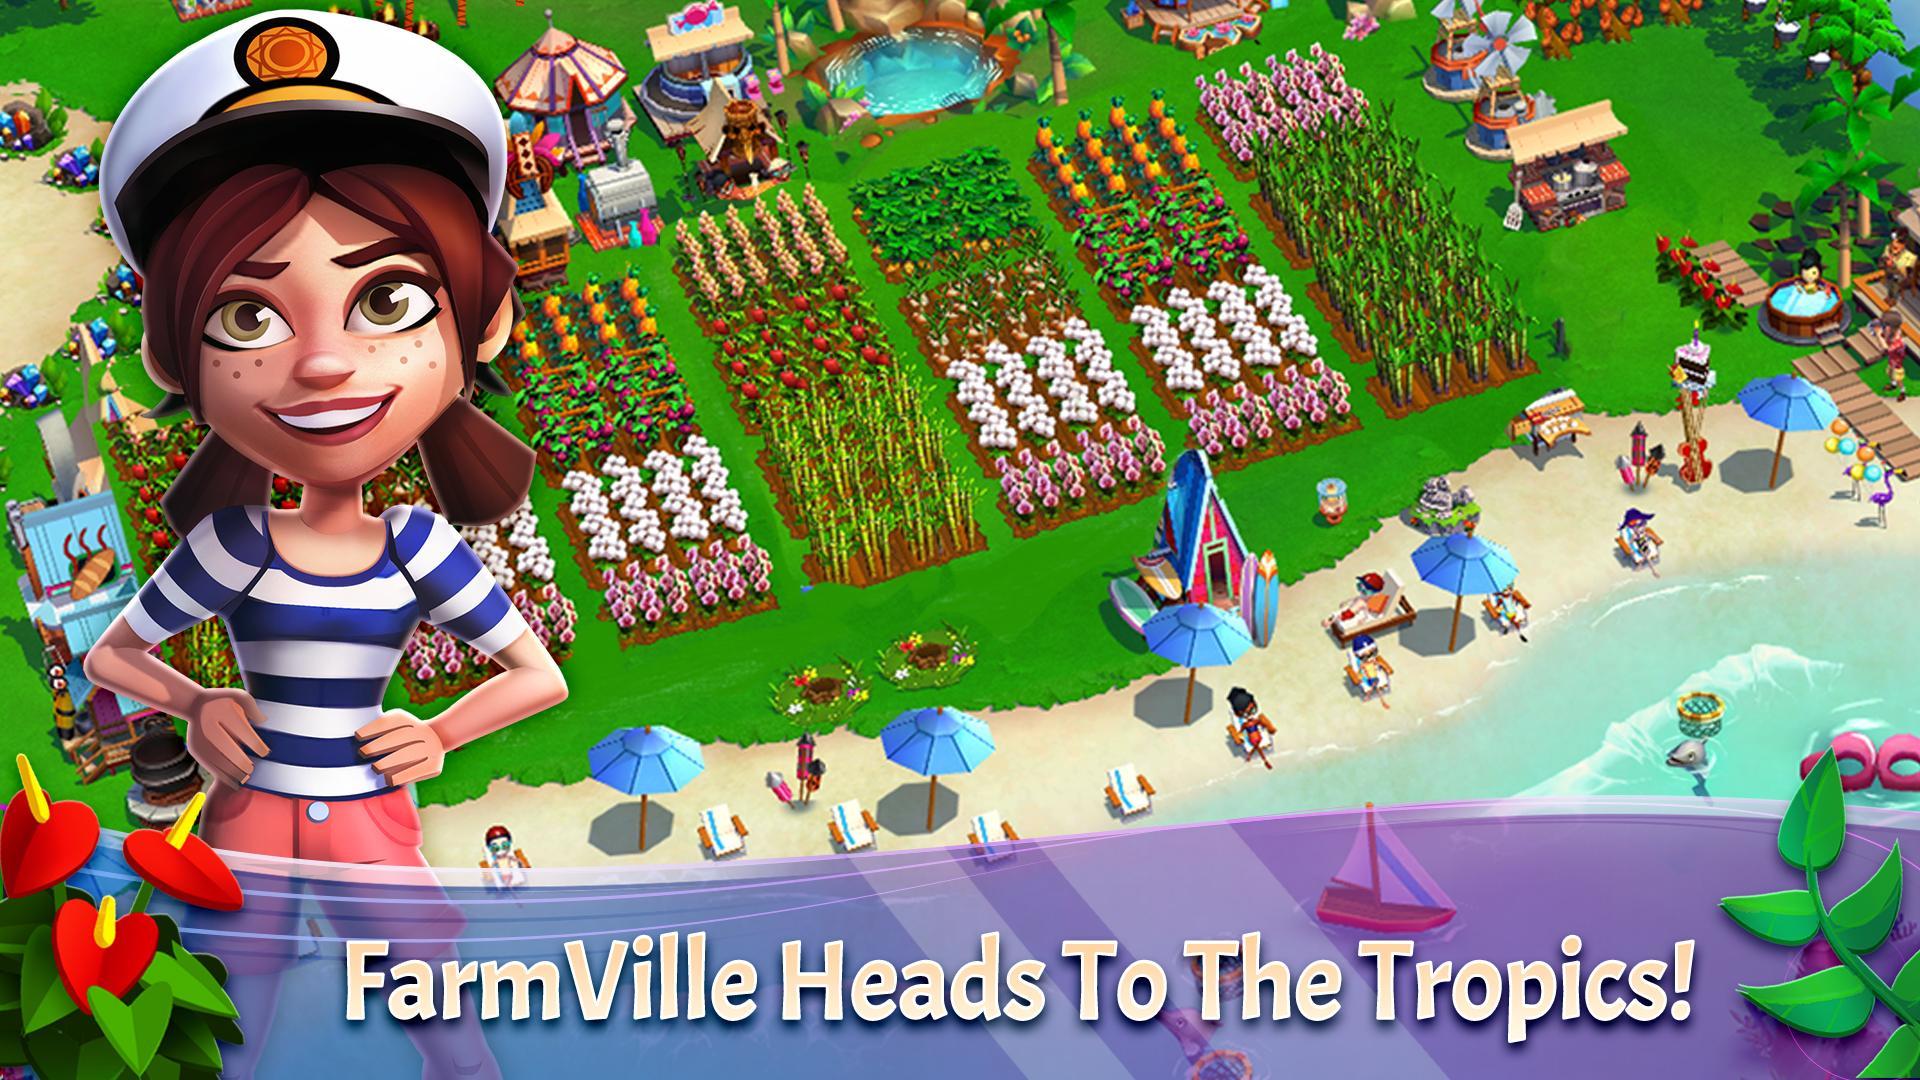 FarmVille 2: Tropic Escape for Android - APK Download